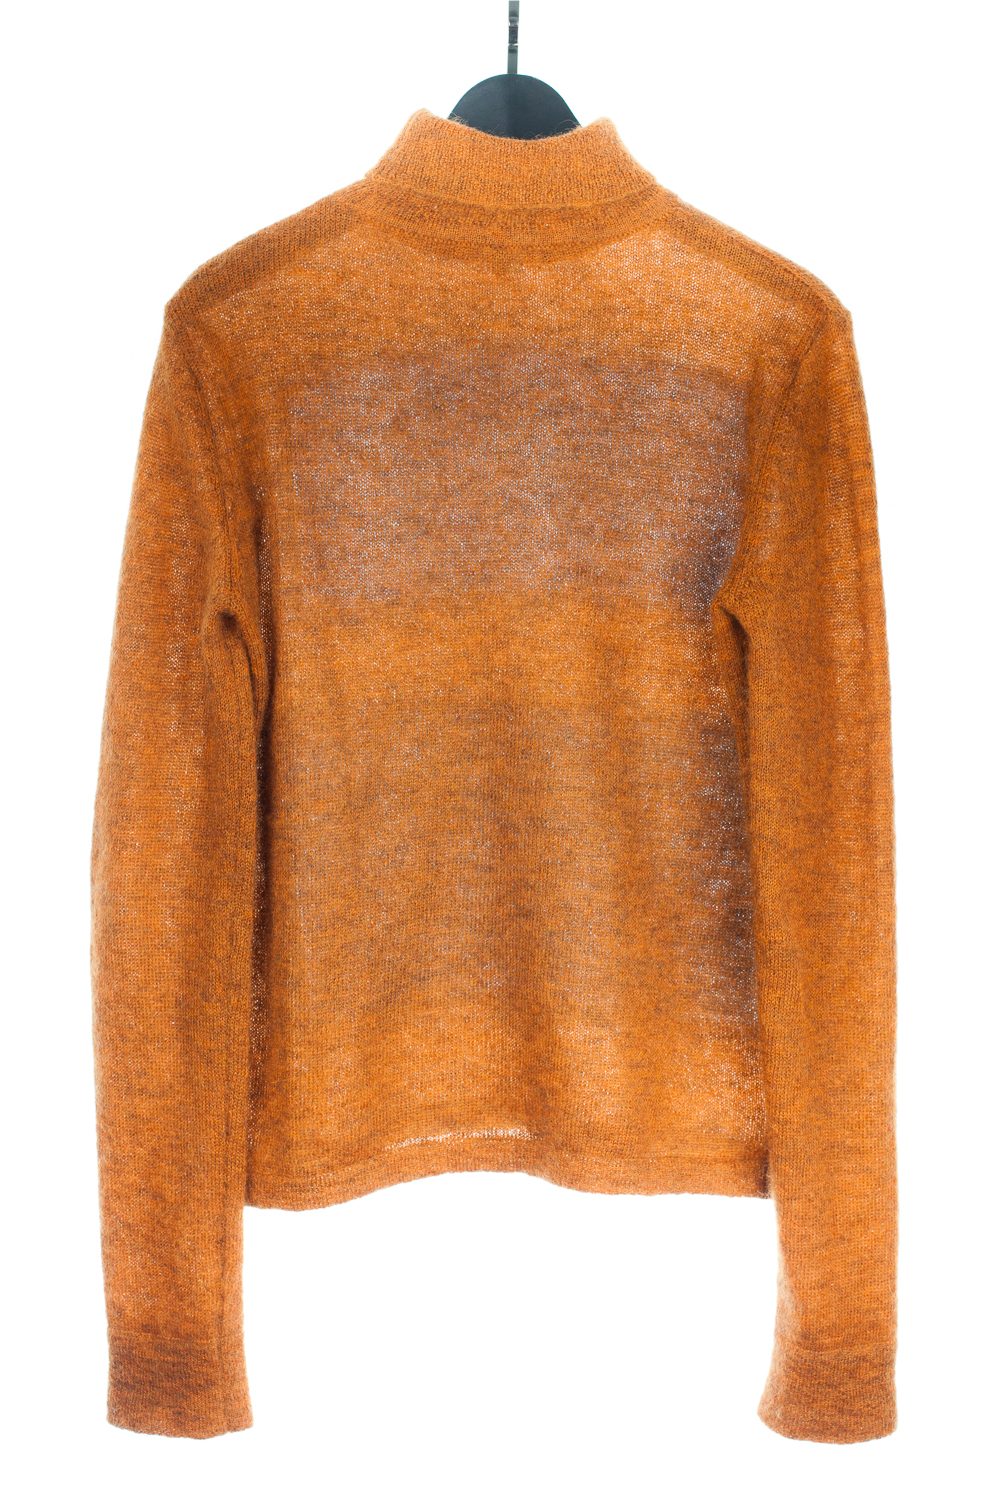 FW08 Rothko Block Sweater